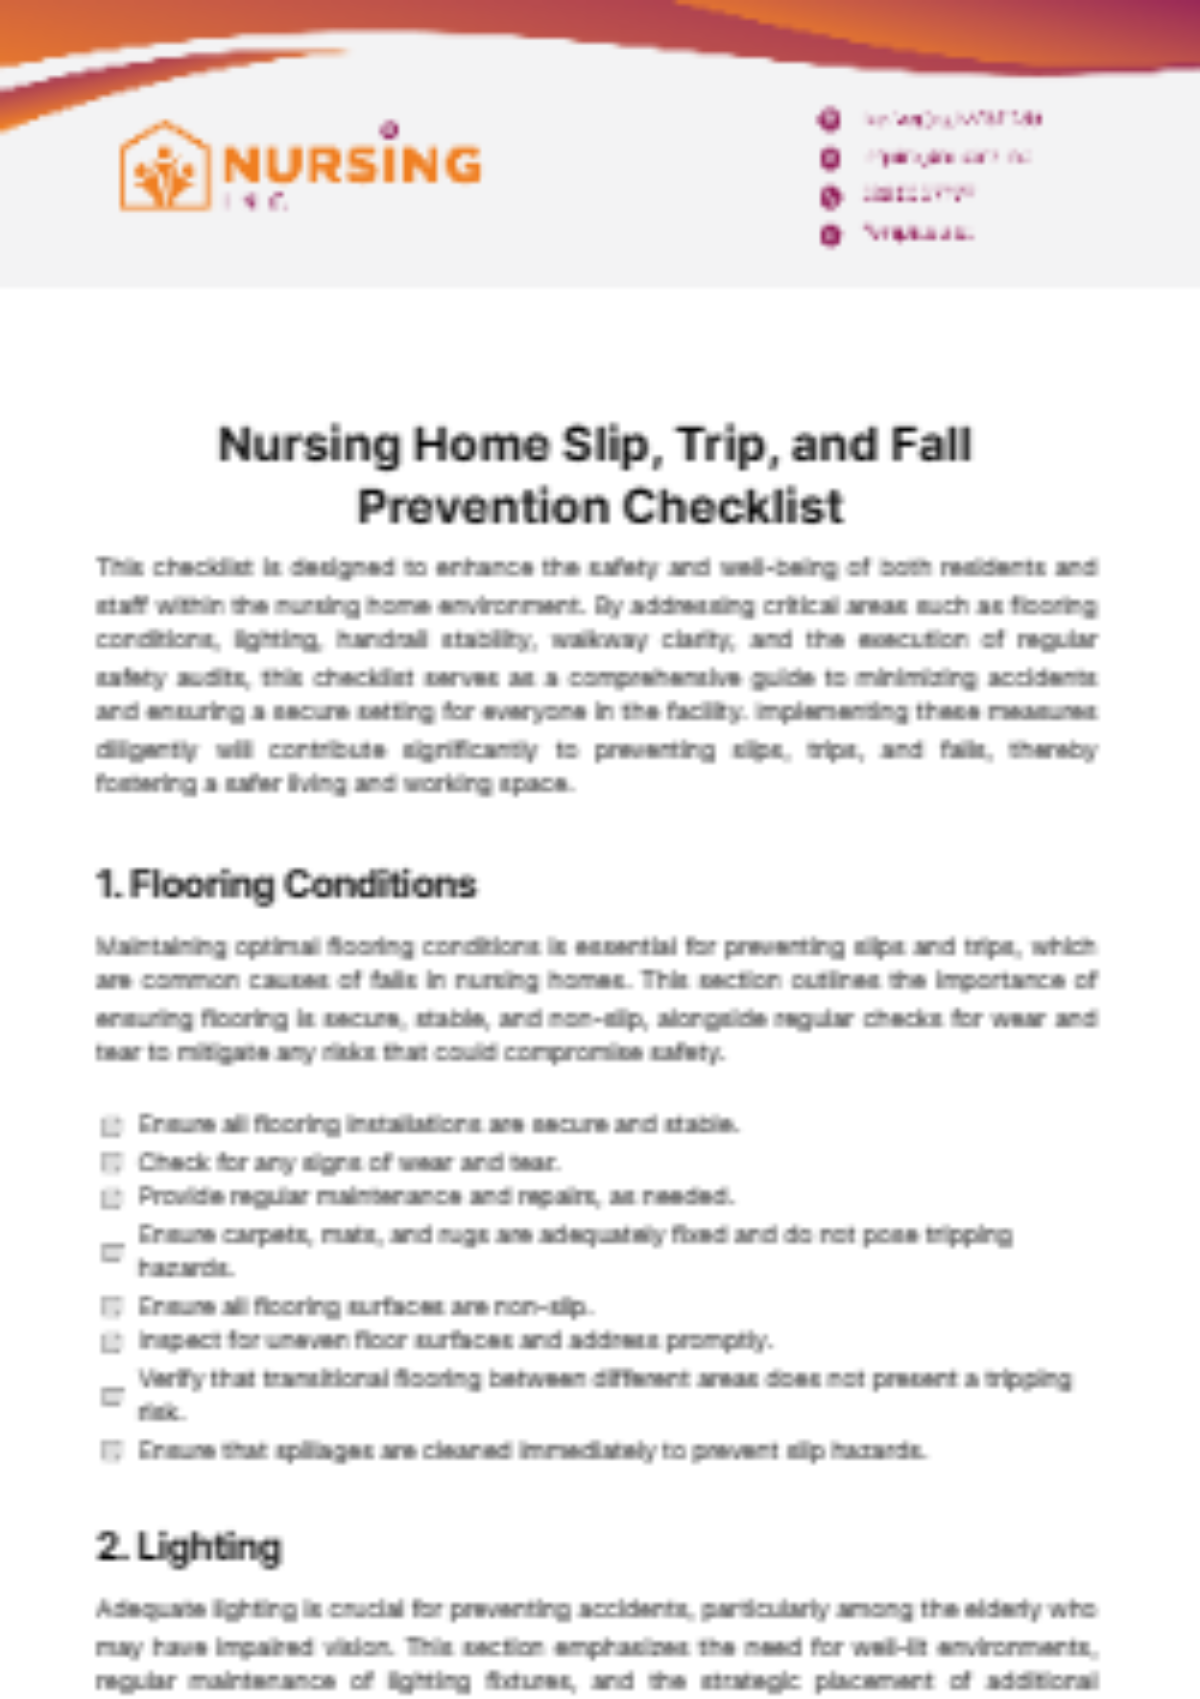 Free Nursing Home Slip, Trip, and Fall Prevention Checklist Template